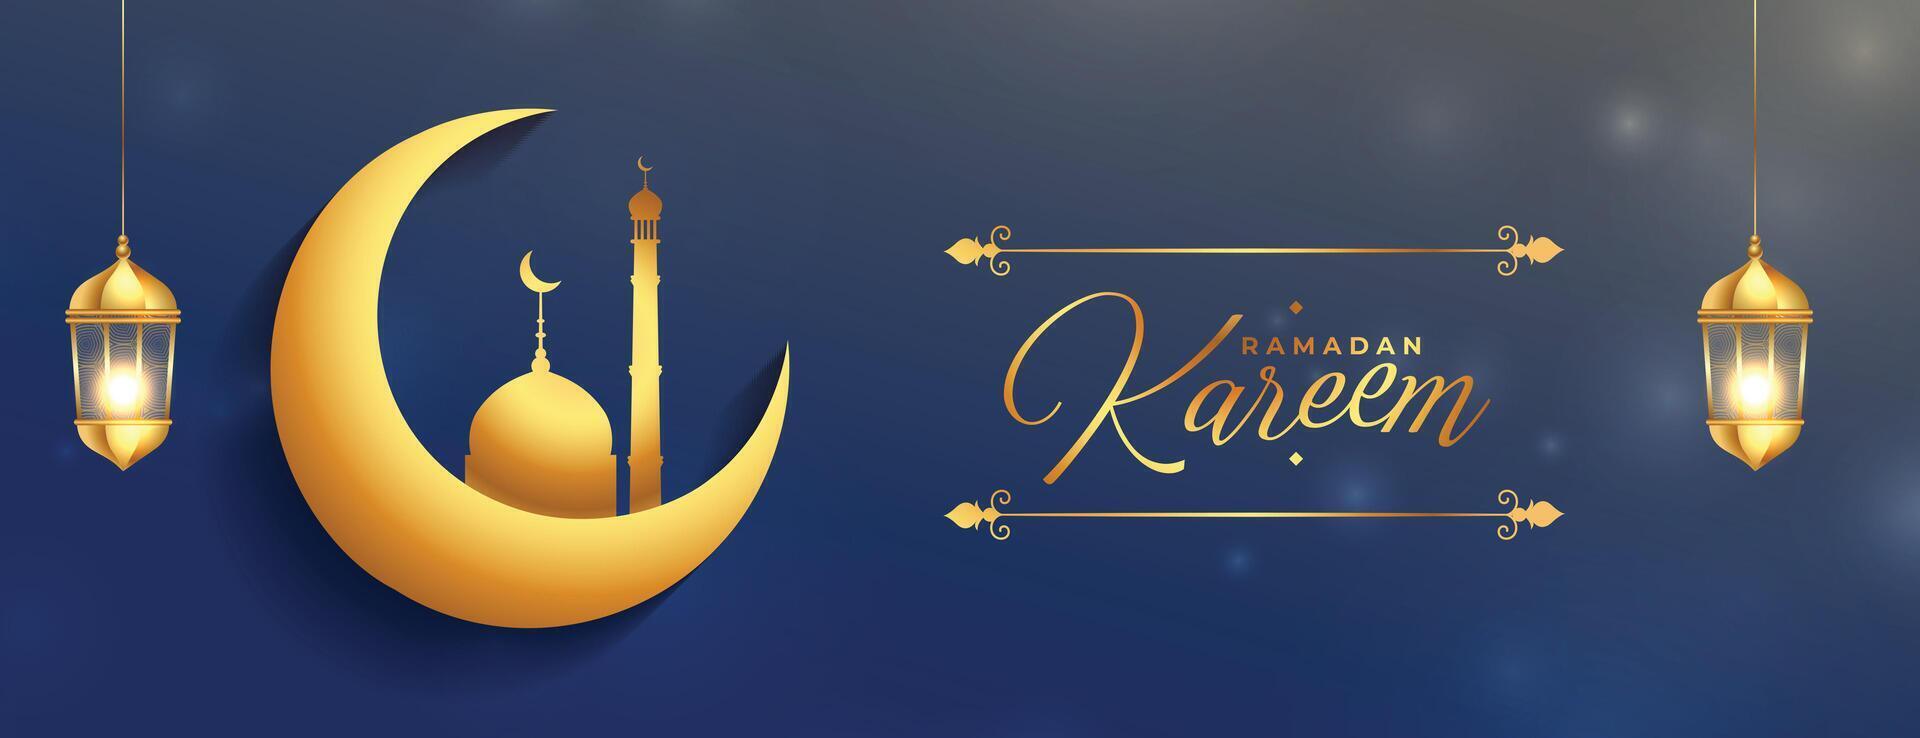 arabic ramadan kareem eid festival golden shiny banner design vector